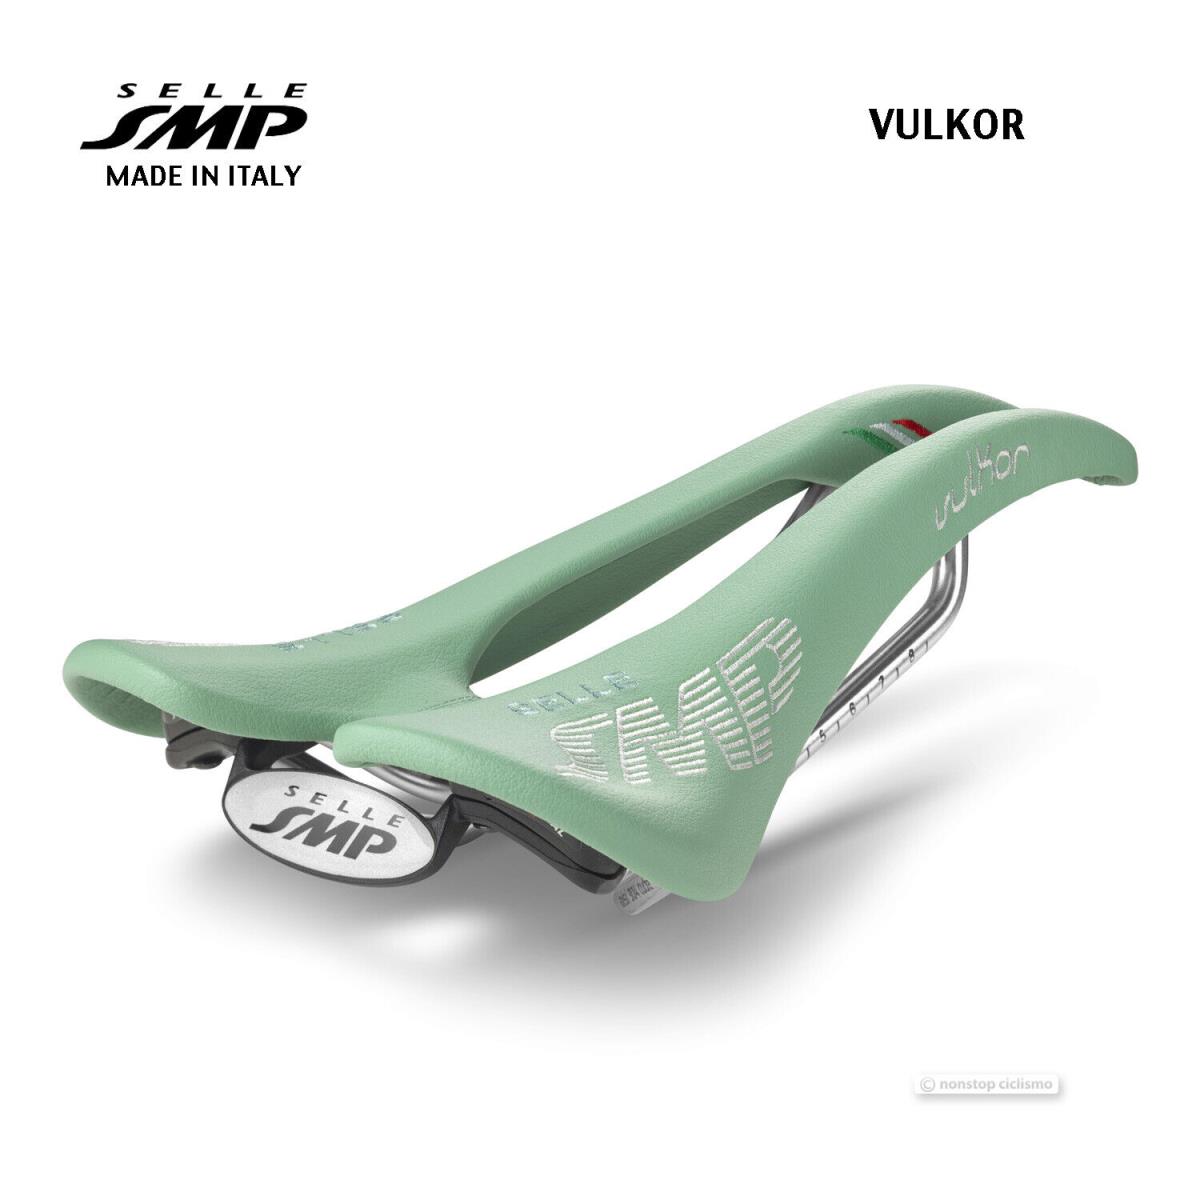 Selle Smp Vulkor Saddle : Bianchi Celeste - Made IN Italy - 